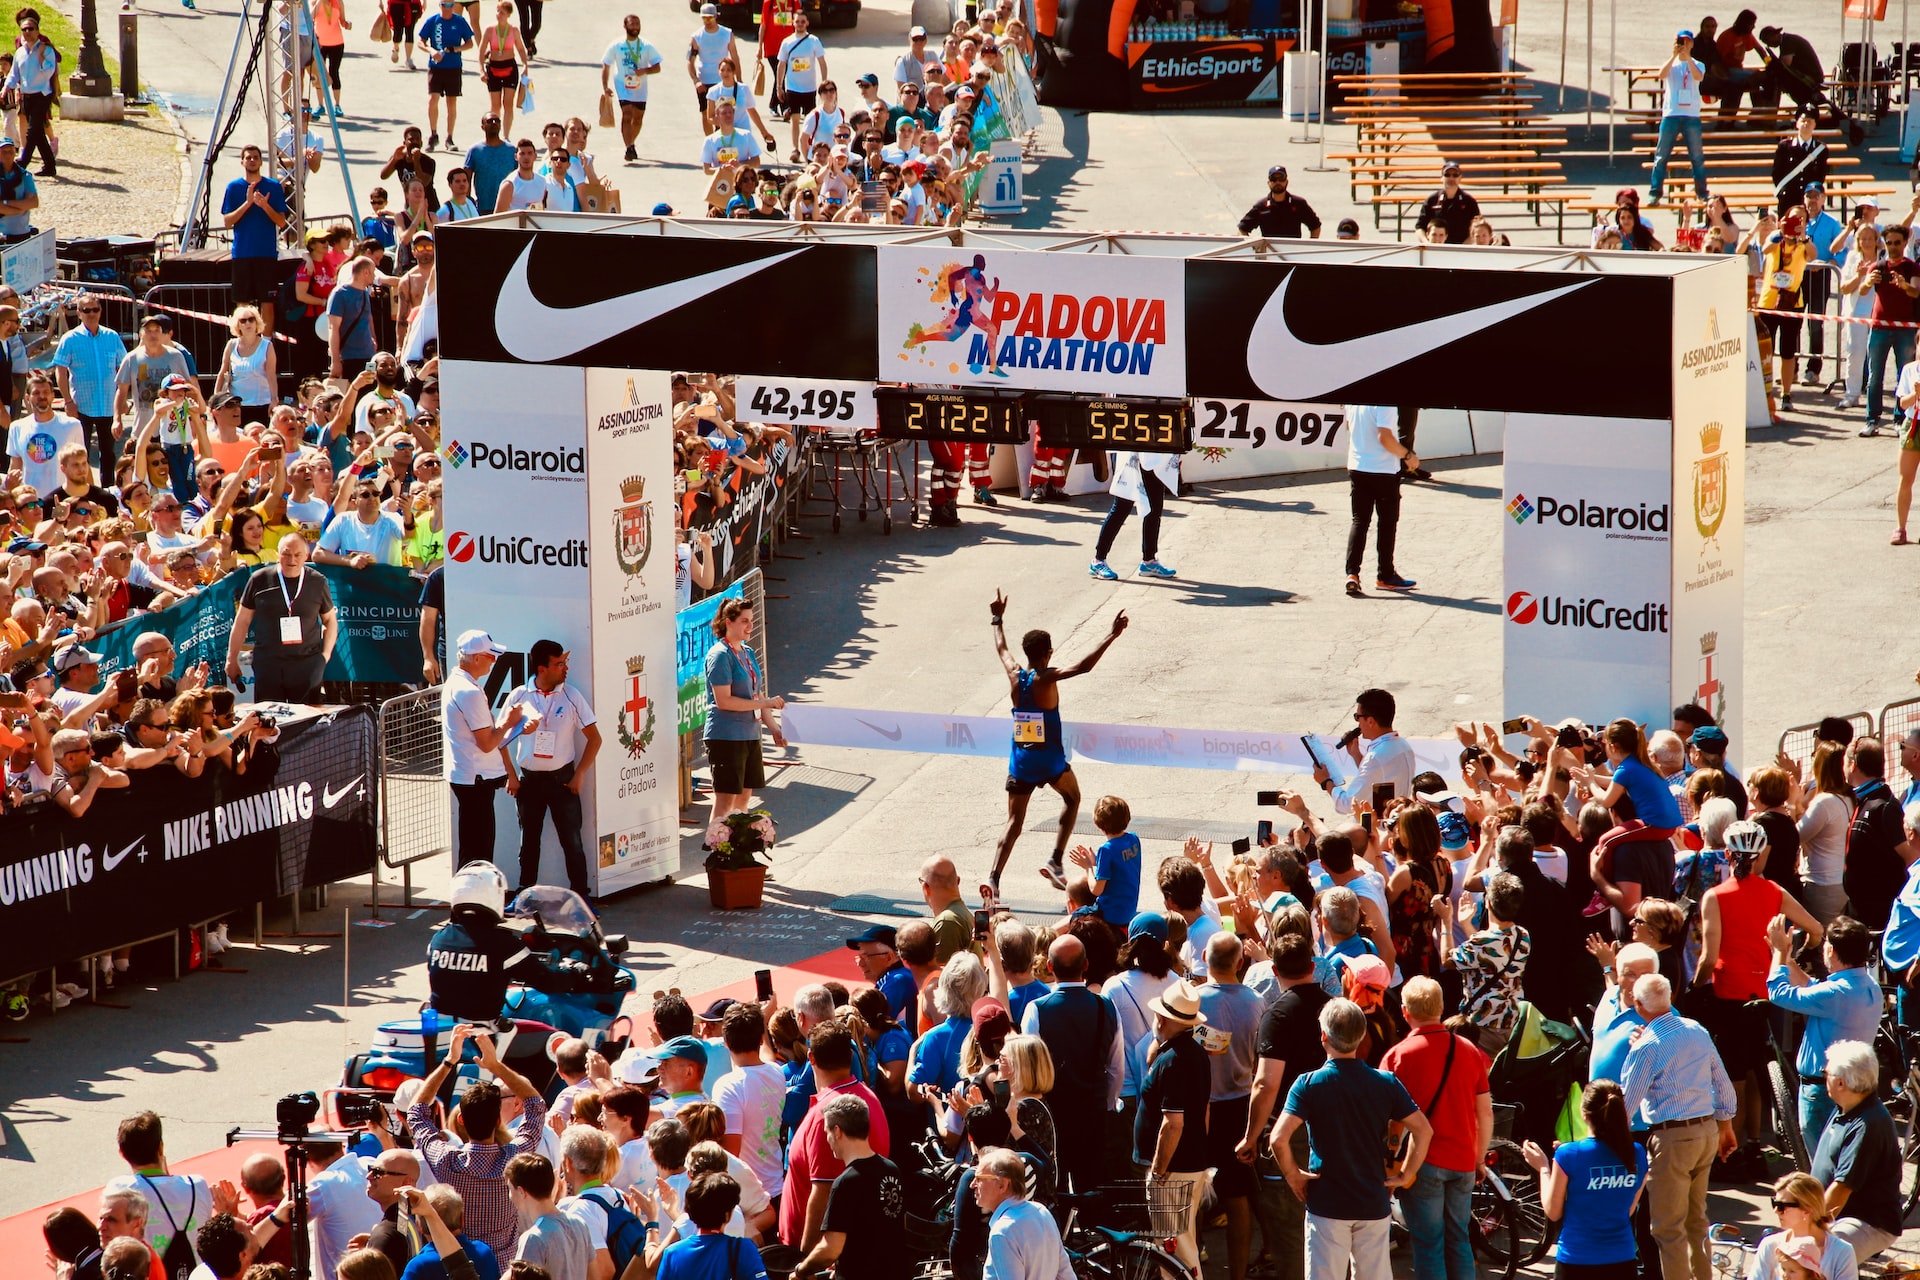 Kipchoge’s marathon world record edges closer to breaking the two-hour mark